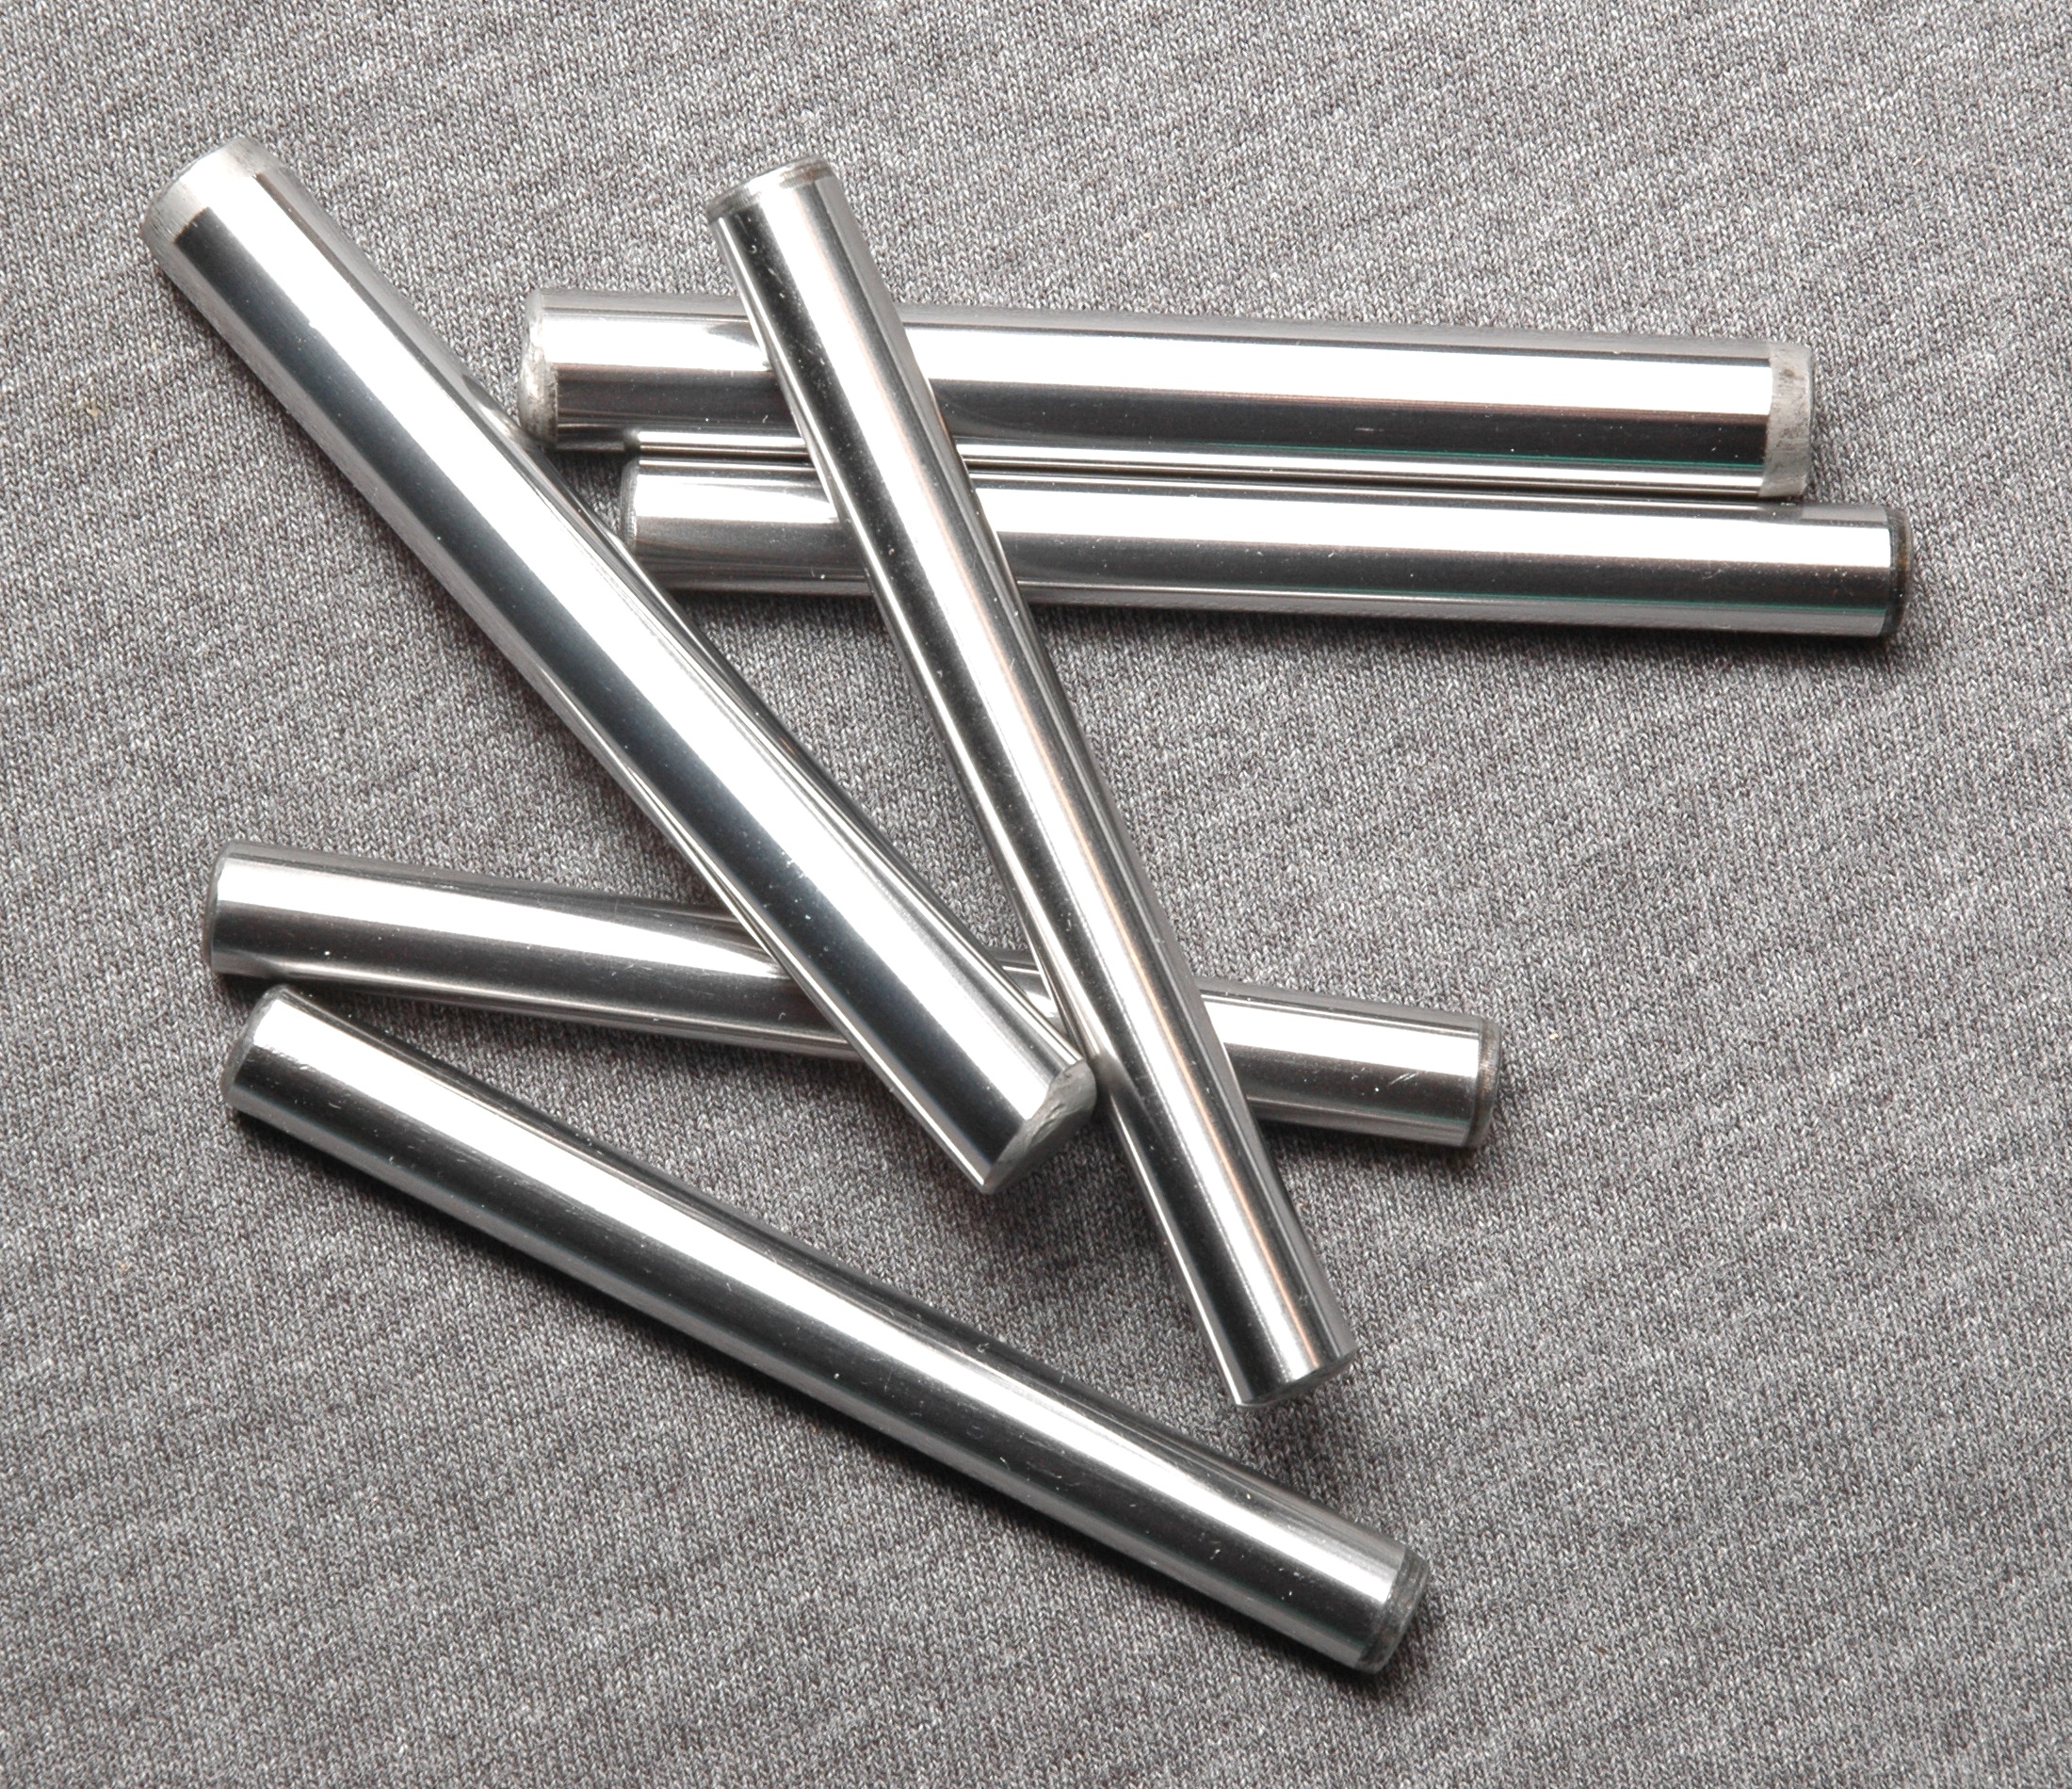 https://upload.wikimedia.org/wikipedia/commons/e/e6/Steel-Dowel-Pins.jpg